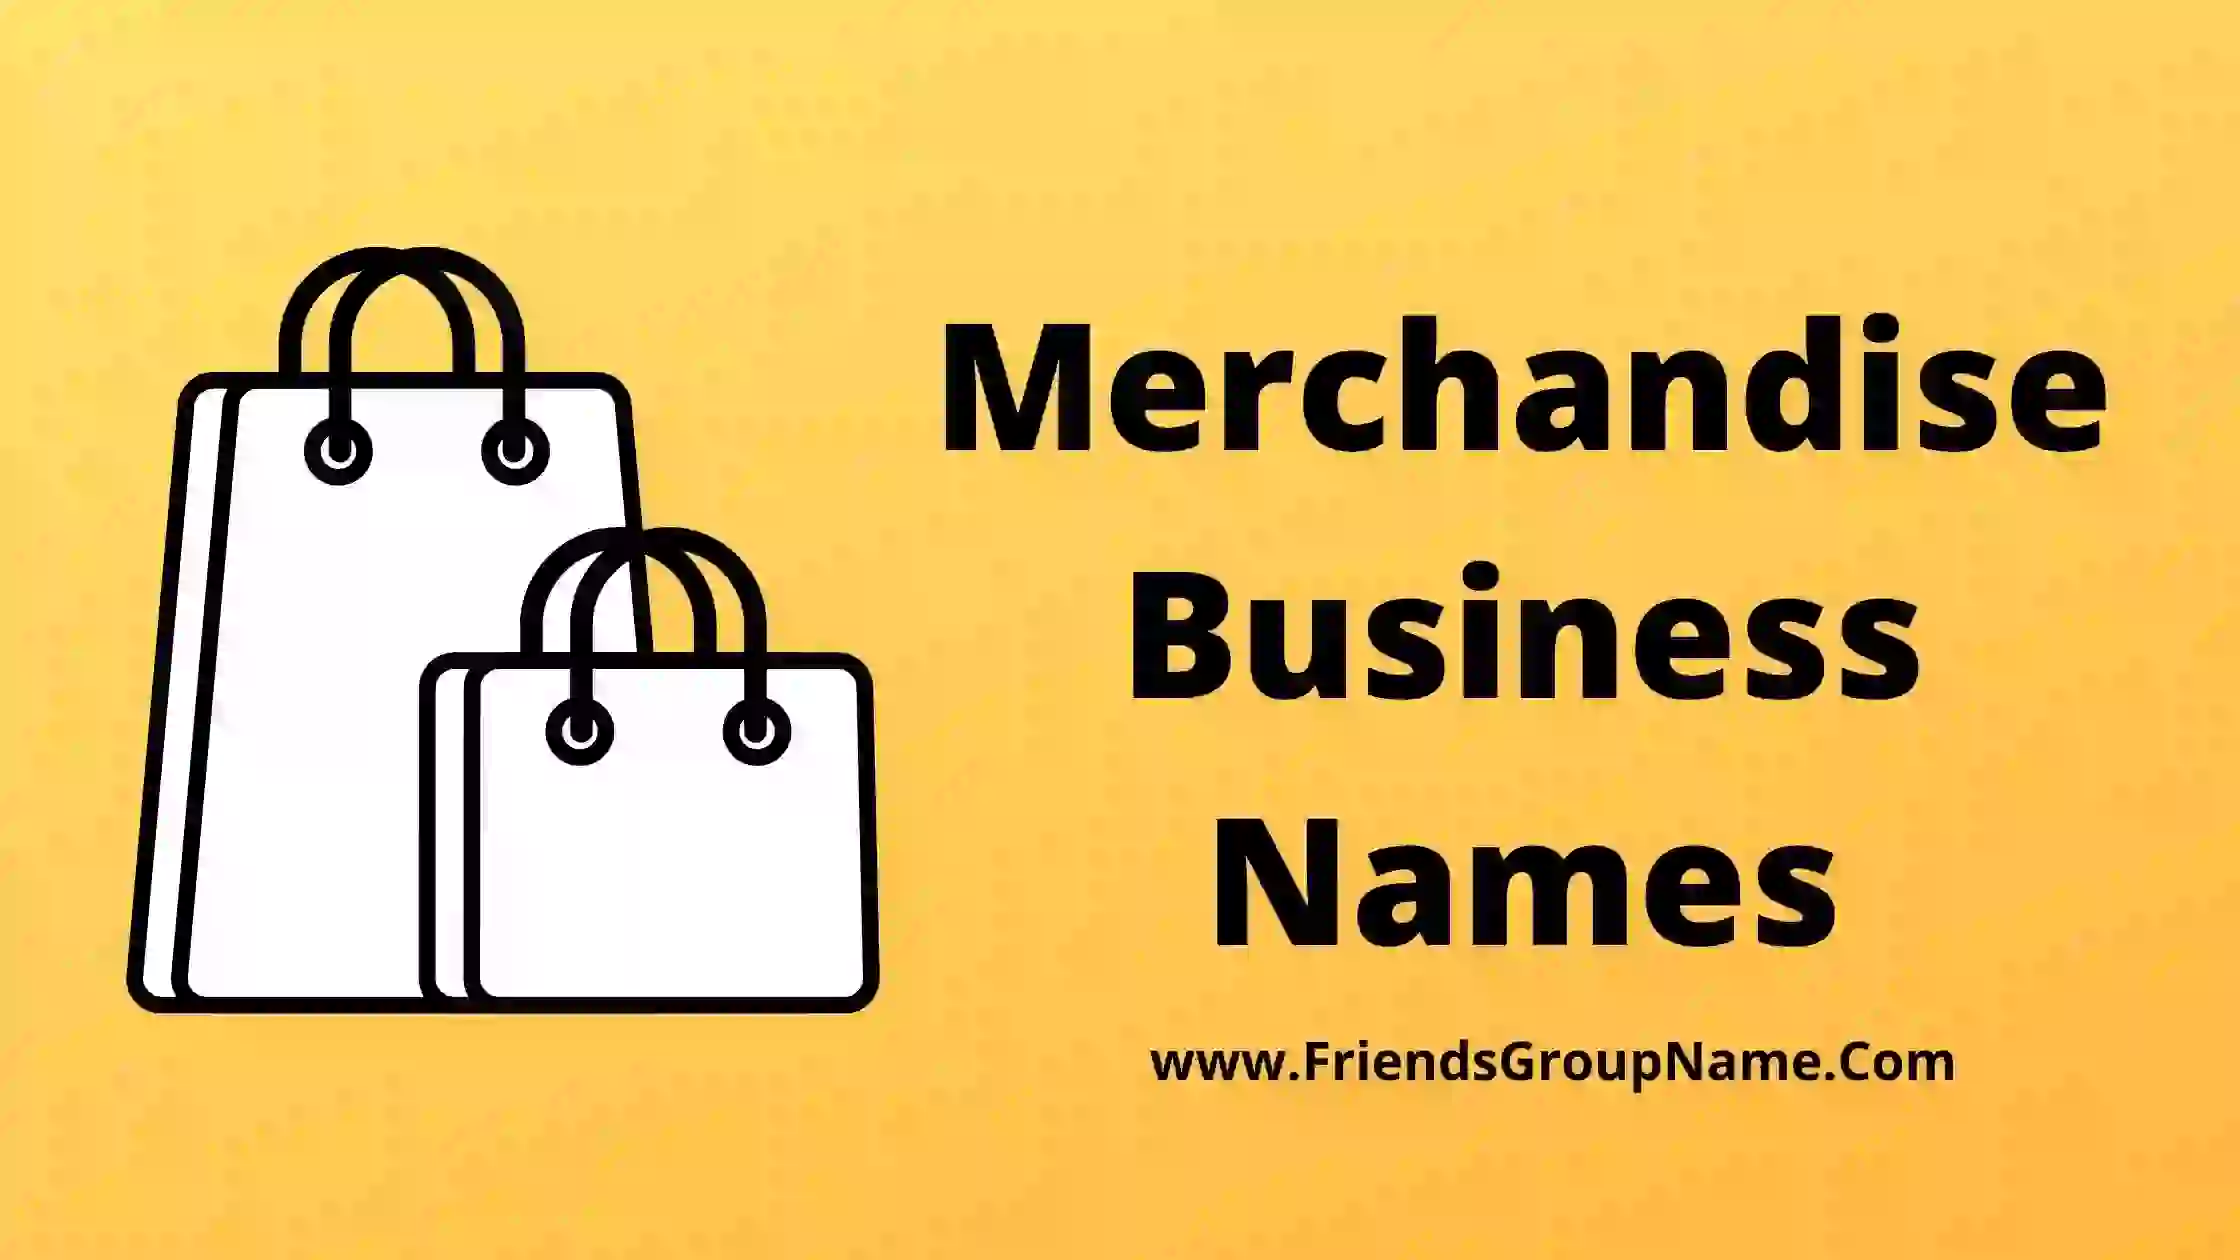 Merchandise Business Names